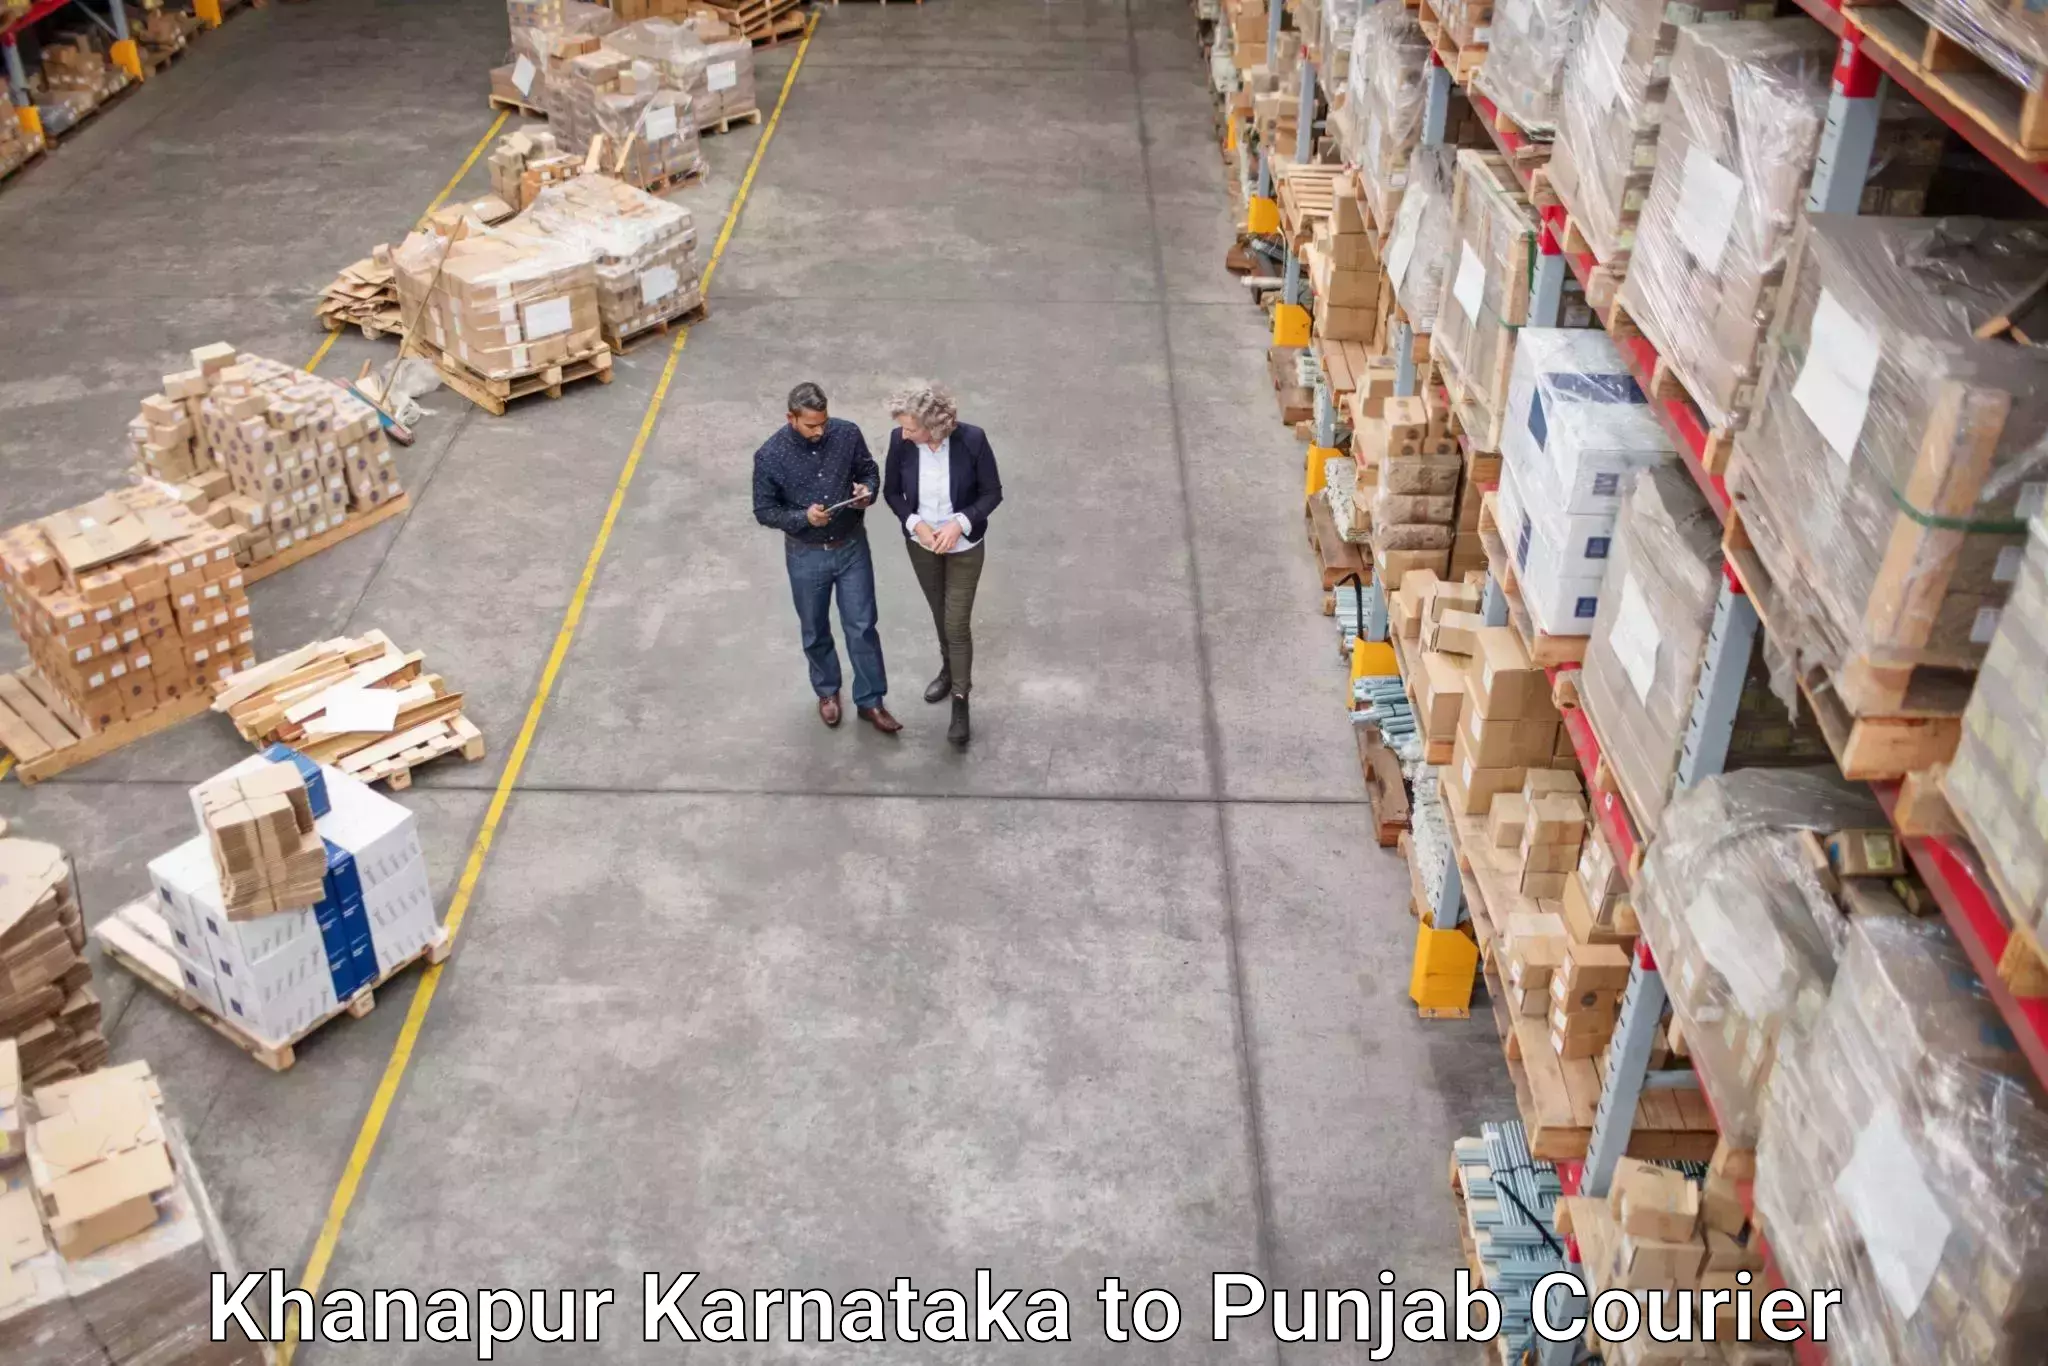 Advanced delivery network Khanapur Karnataka to Moga